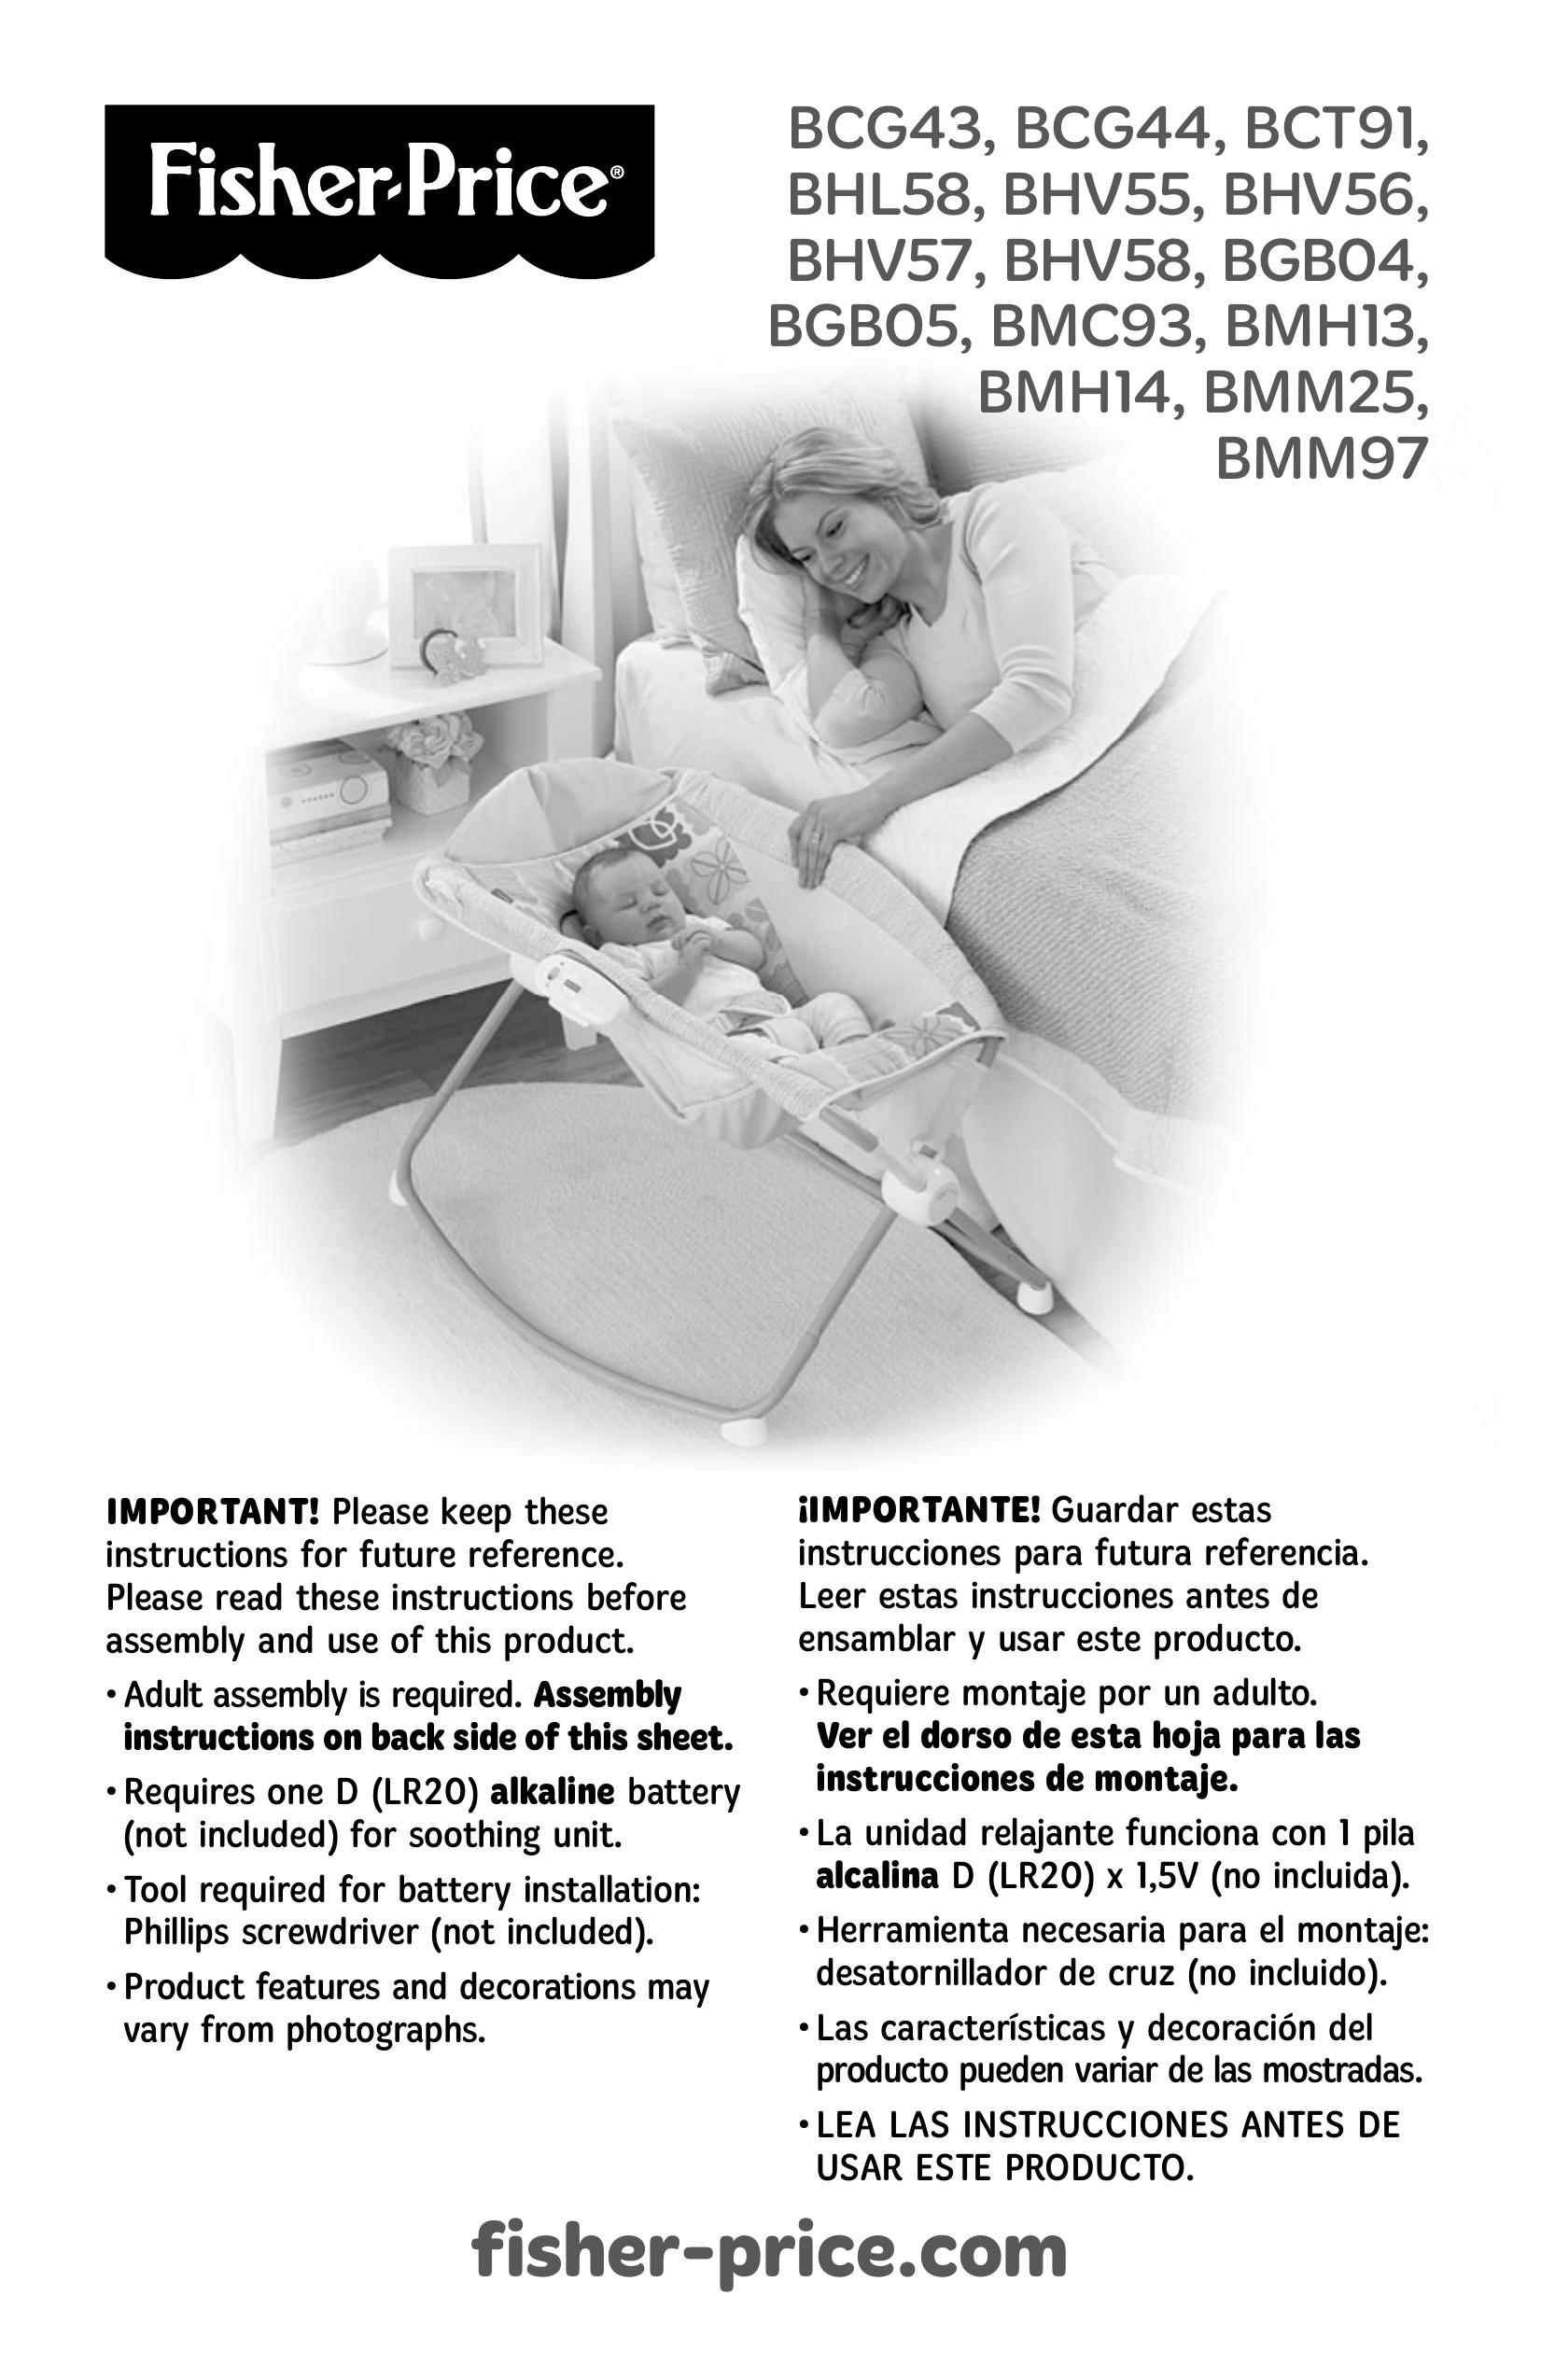 Fisher-Price BHL58 Sleep Apnea Machine User Manual